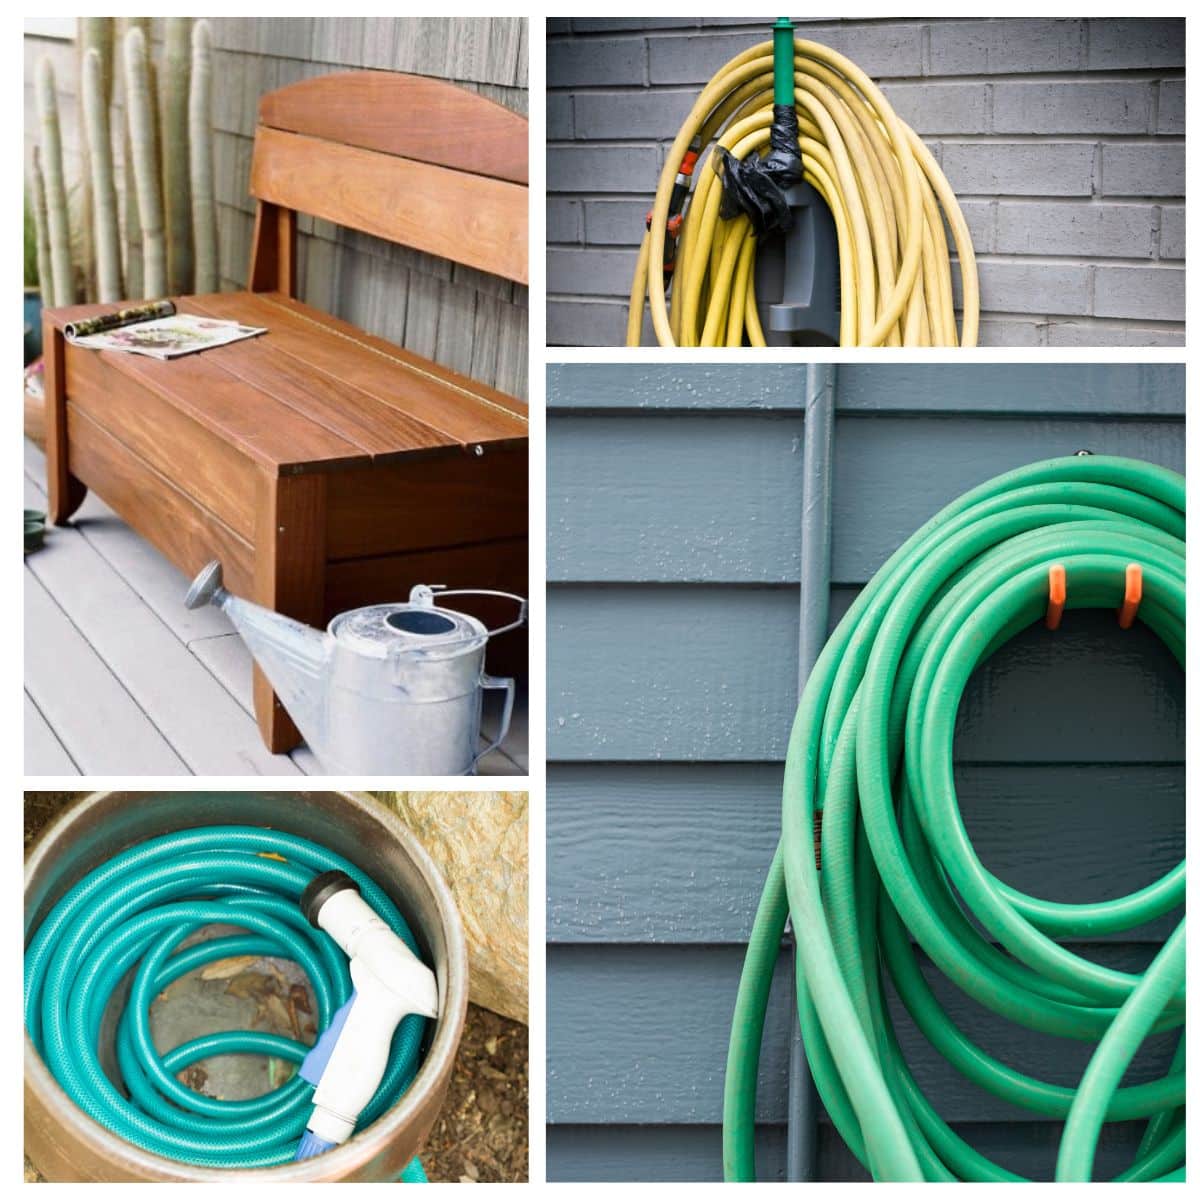 7 DIY Garden Hose Storage Ideas To Spruce Up Your Outdoors - DIY & Crafts